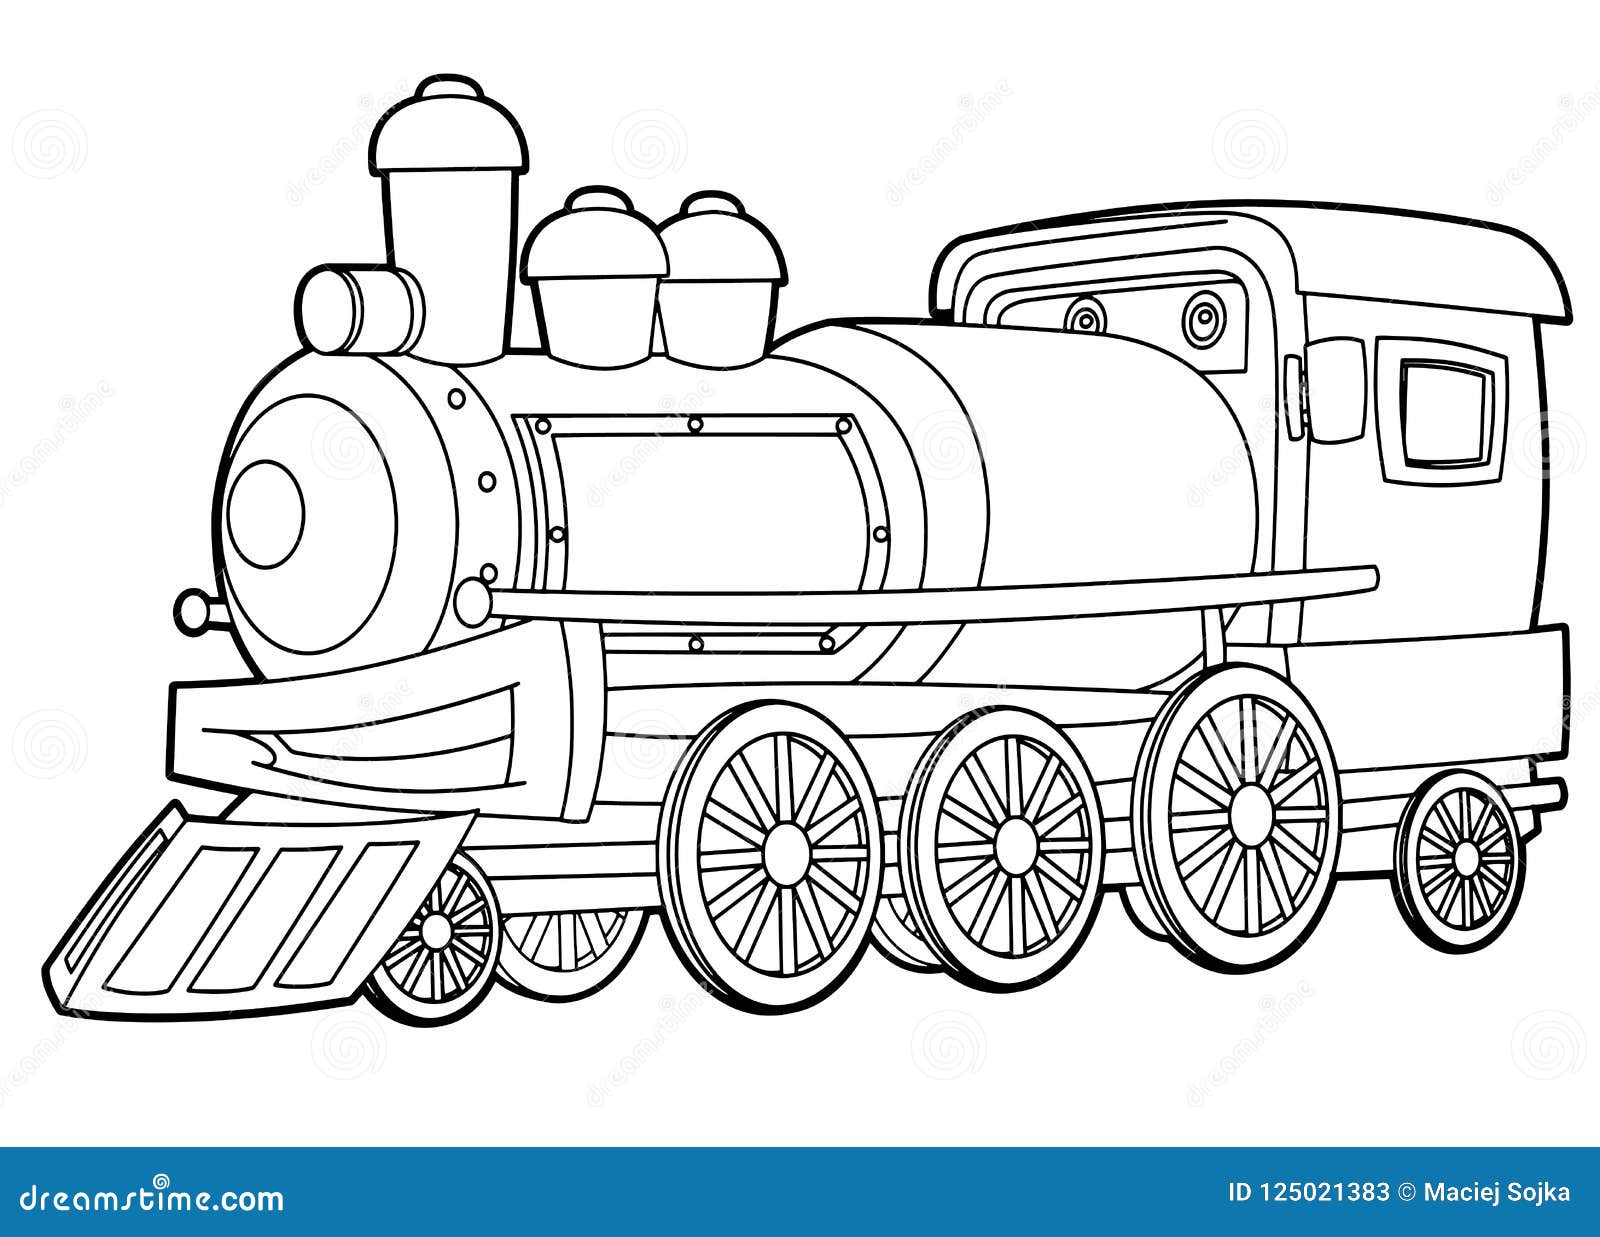 Cartoon Funny Looking Steam Train - Vector Coloring Page ...